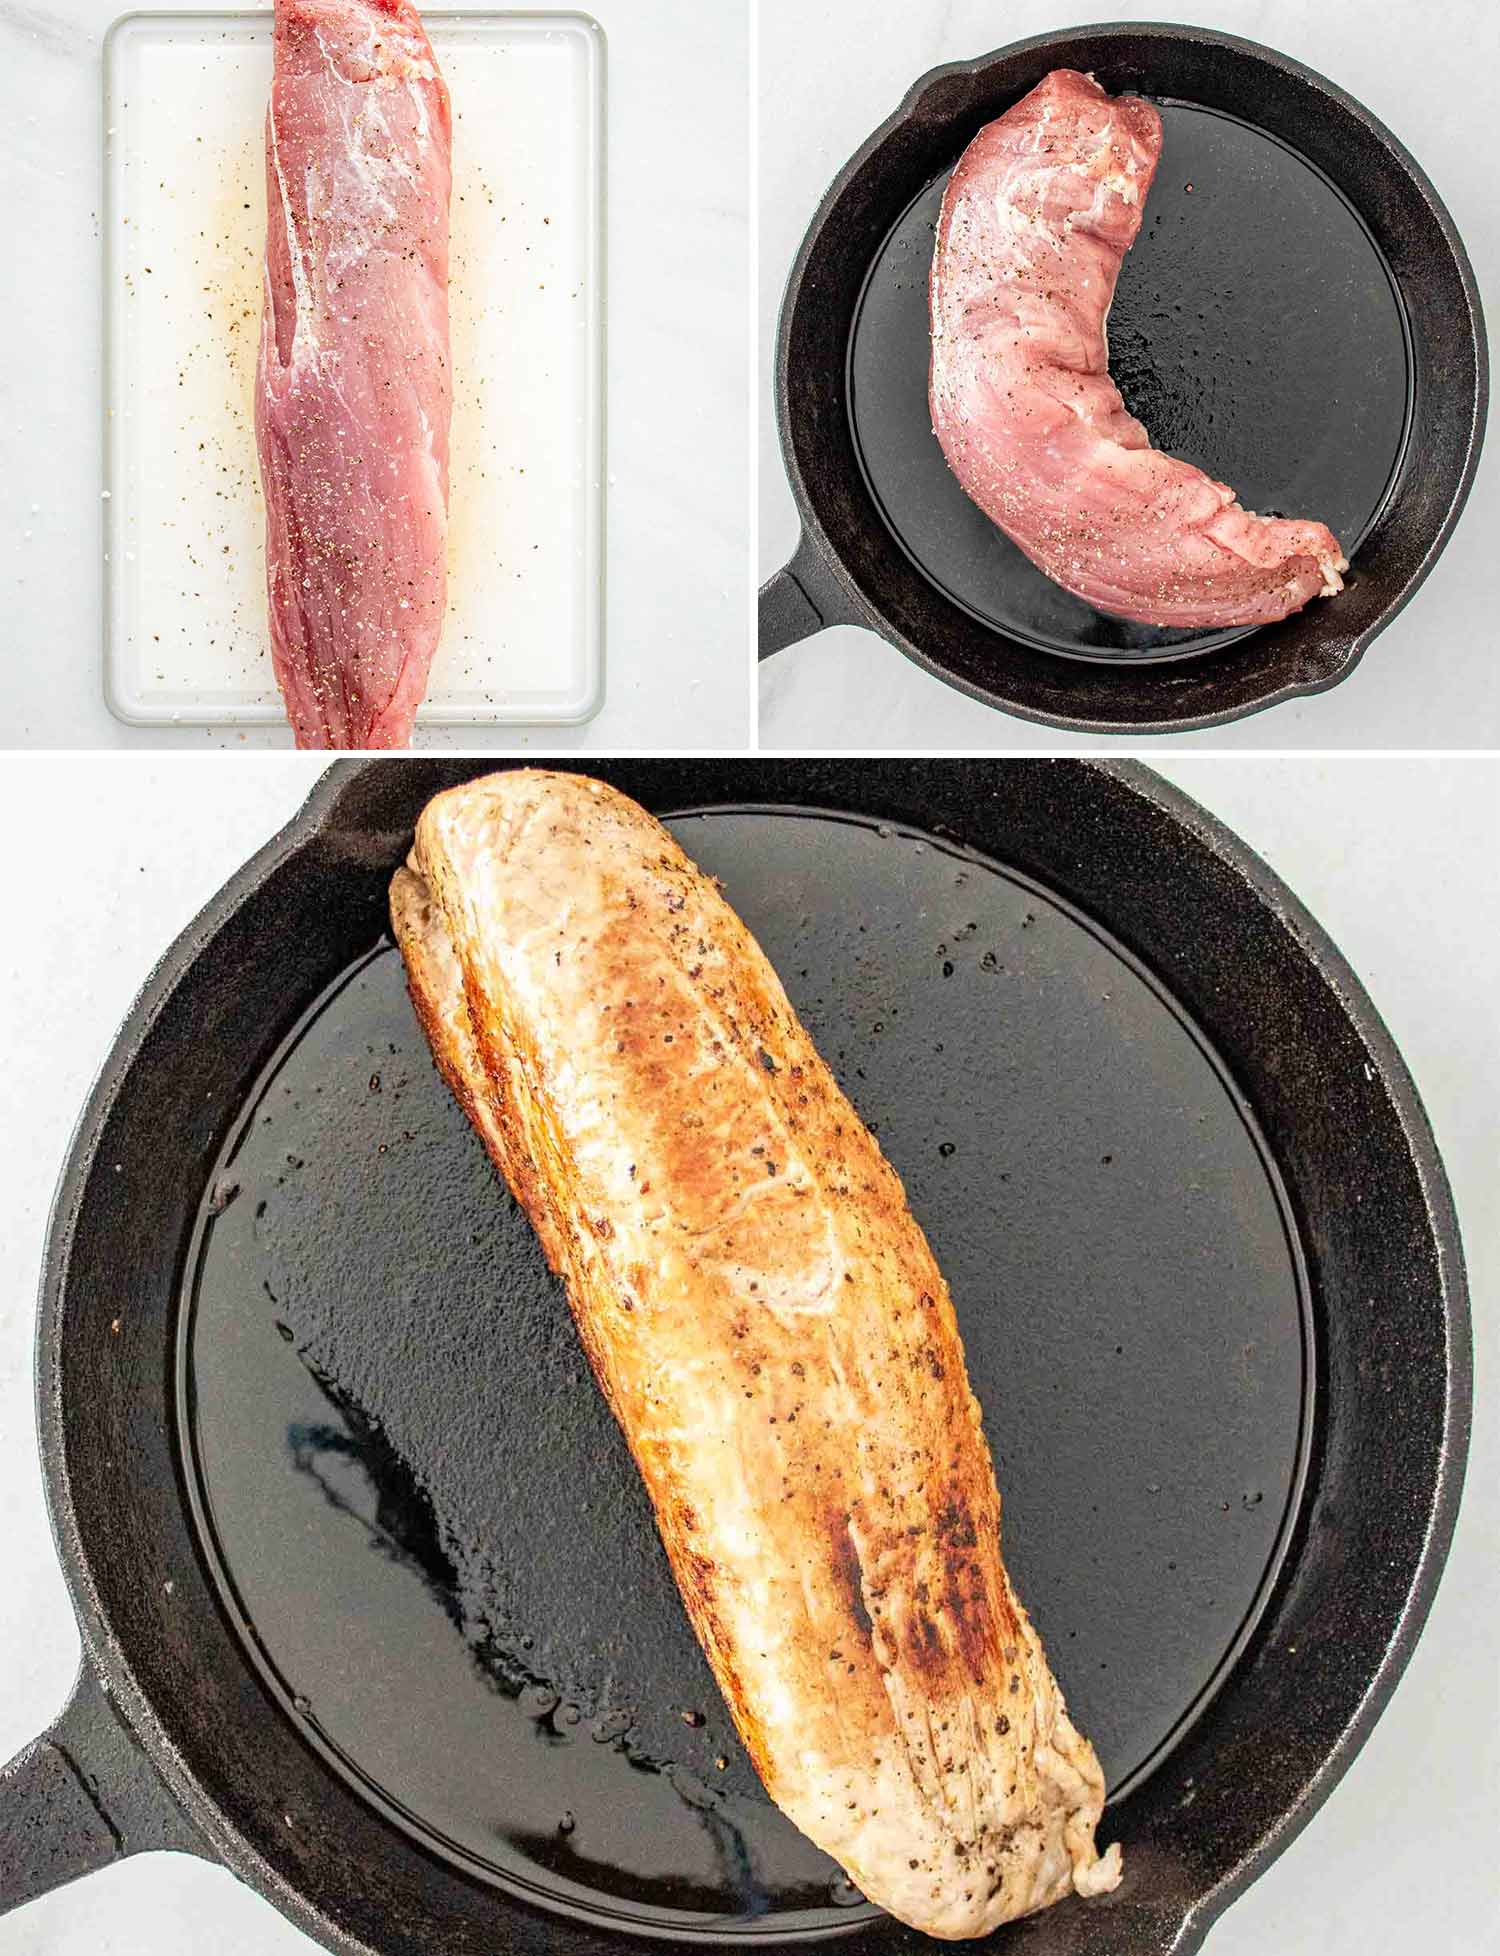 process shots showing how to make maple glazed pork tenderloin.